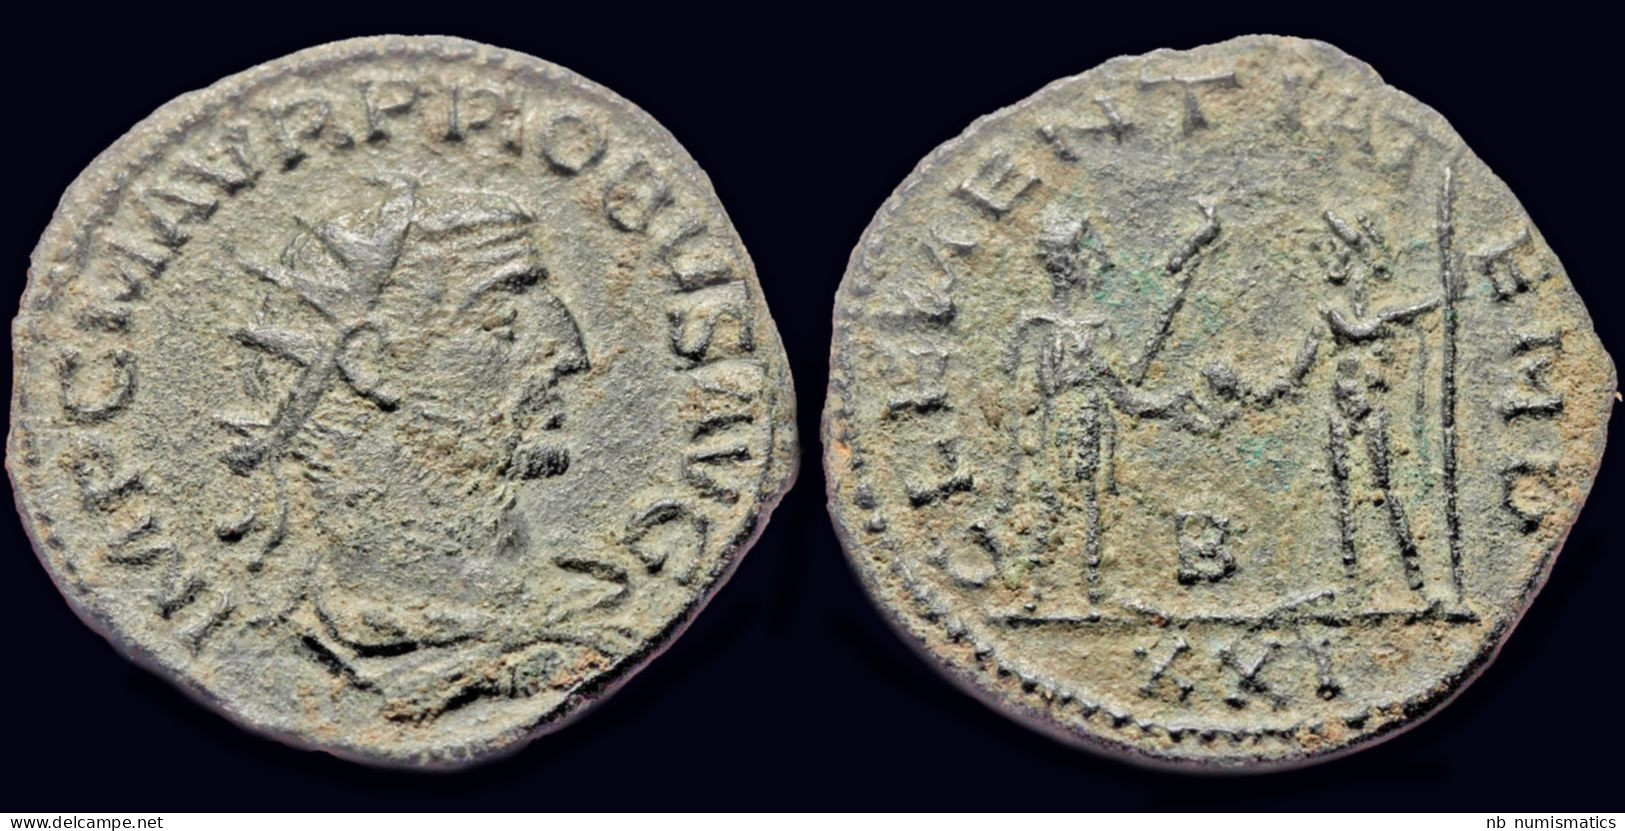 Probus AE Antoninianus Emperor Receiving Globe From Jupiter - Der Soldatenkaiser (die Militärkrise) (235 / 284)